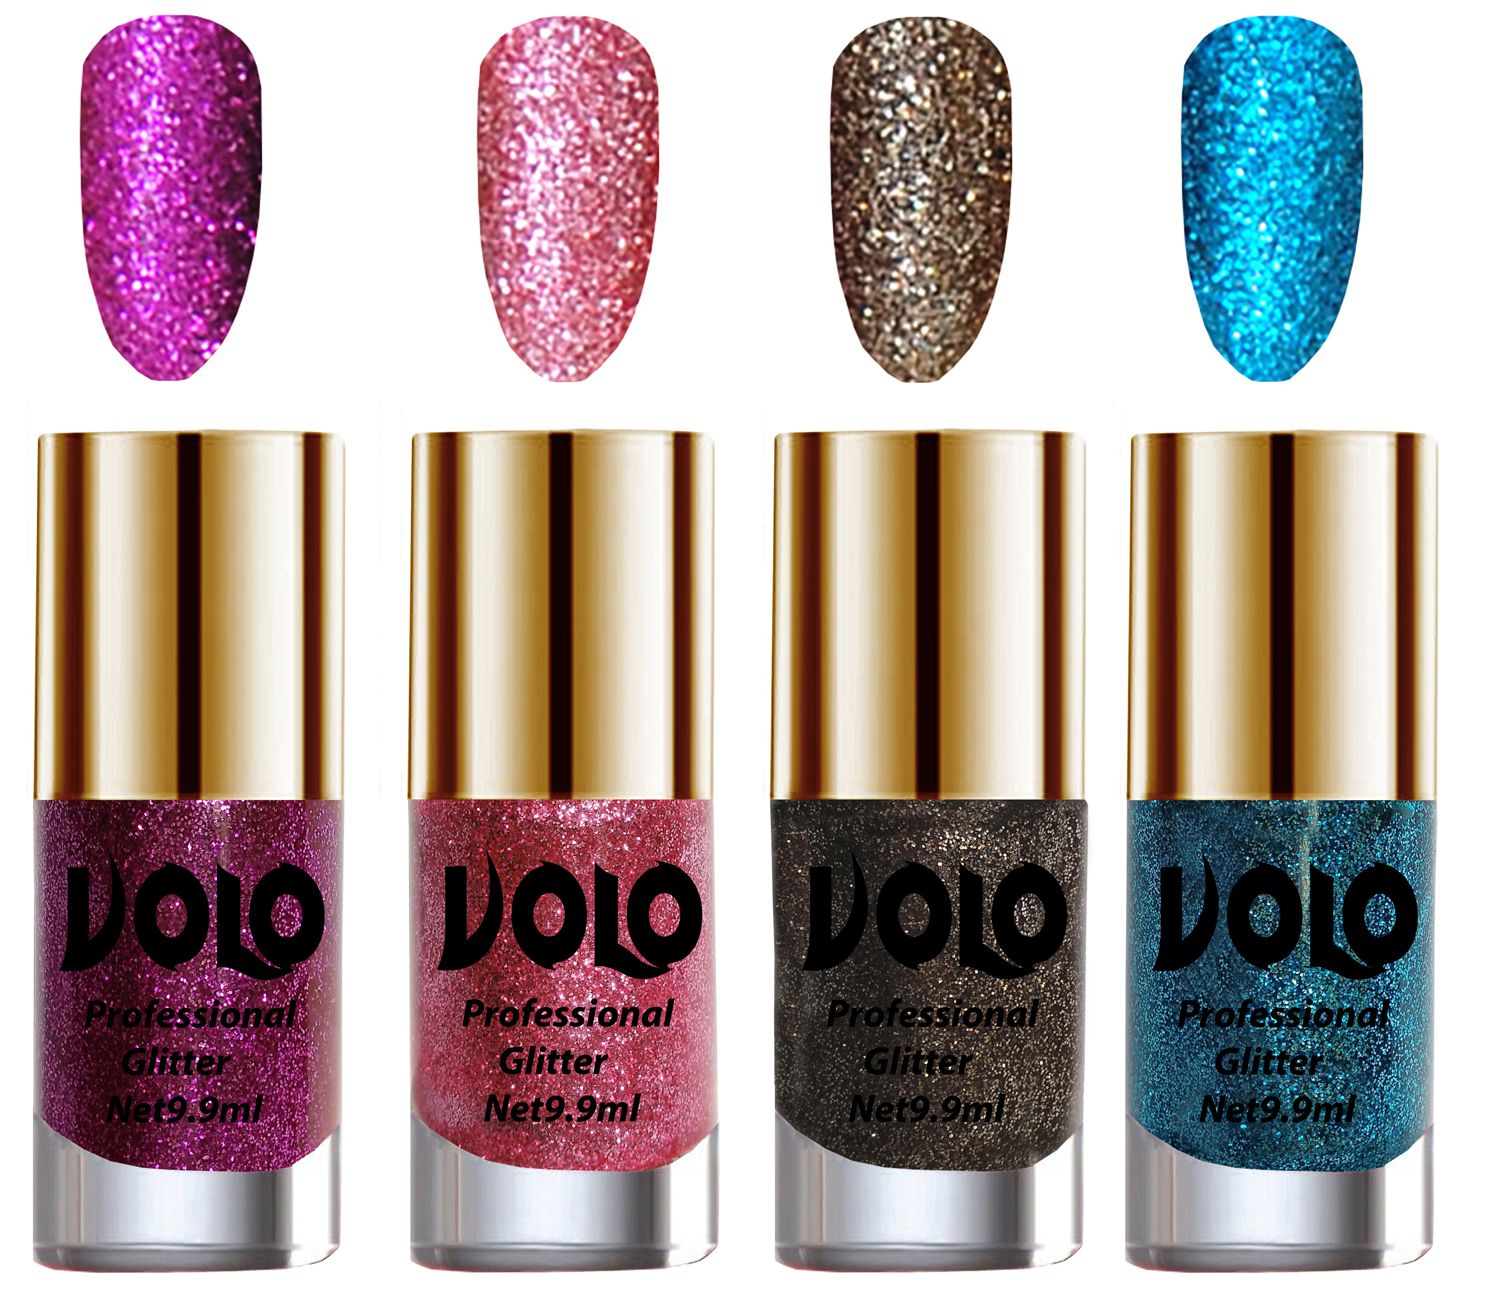     			VOLO Professionally Used Glitter Shine Nail Polish Purple,Pink,Grey Blue Pack of 4 39 mL